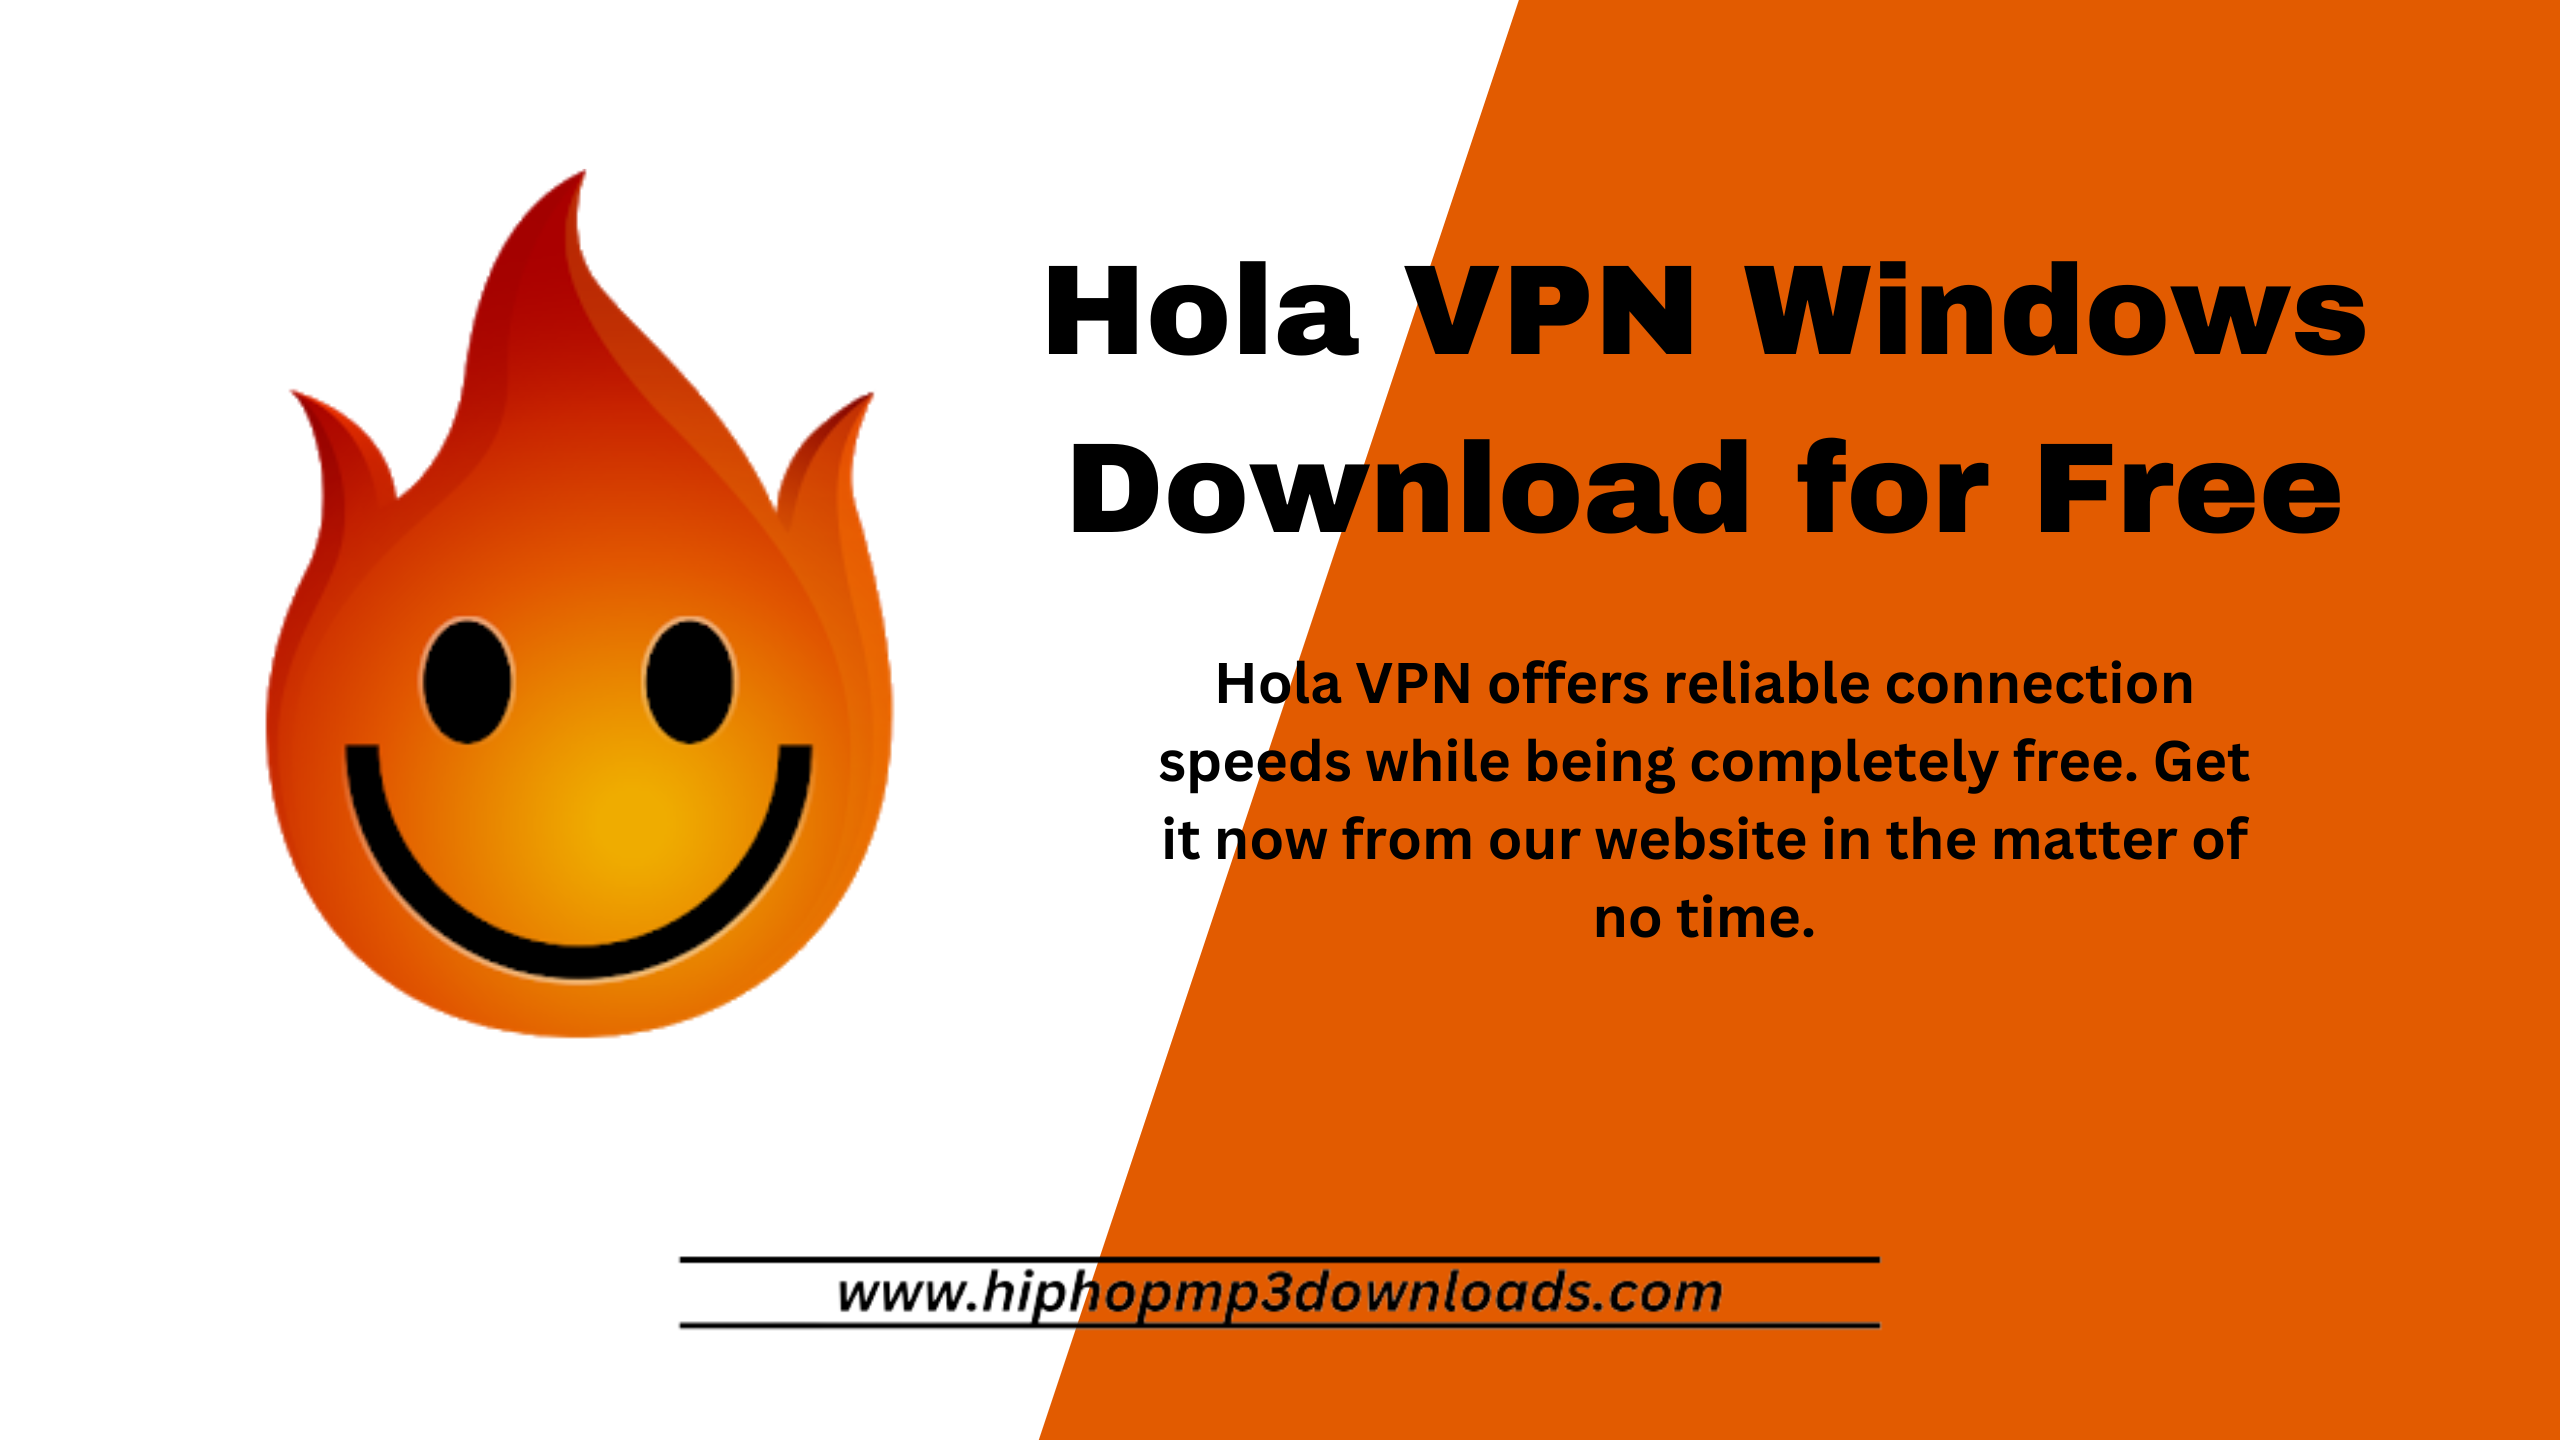 Hola VPN Windows Download for Free